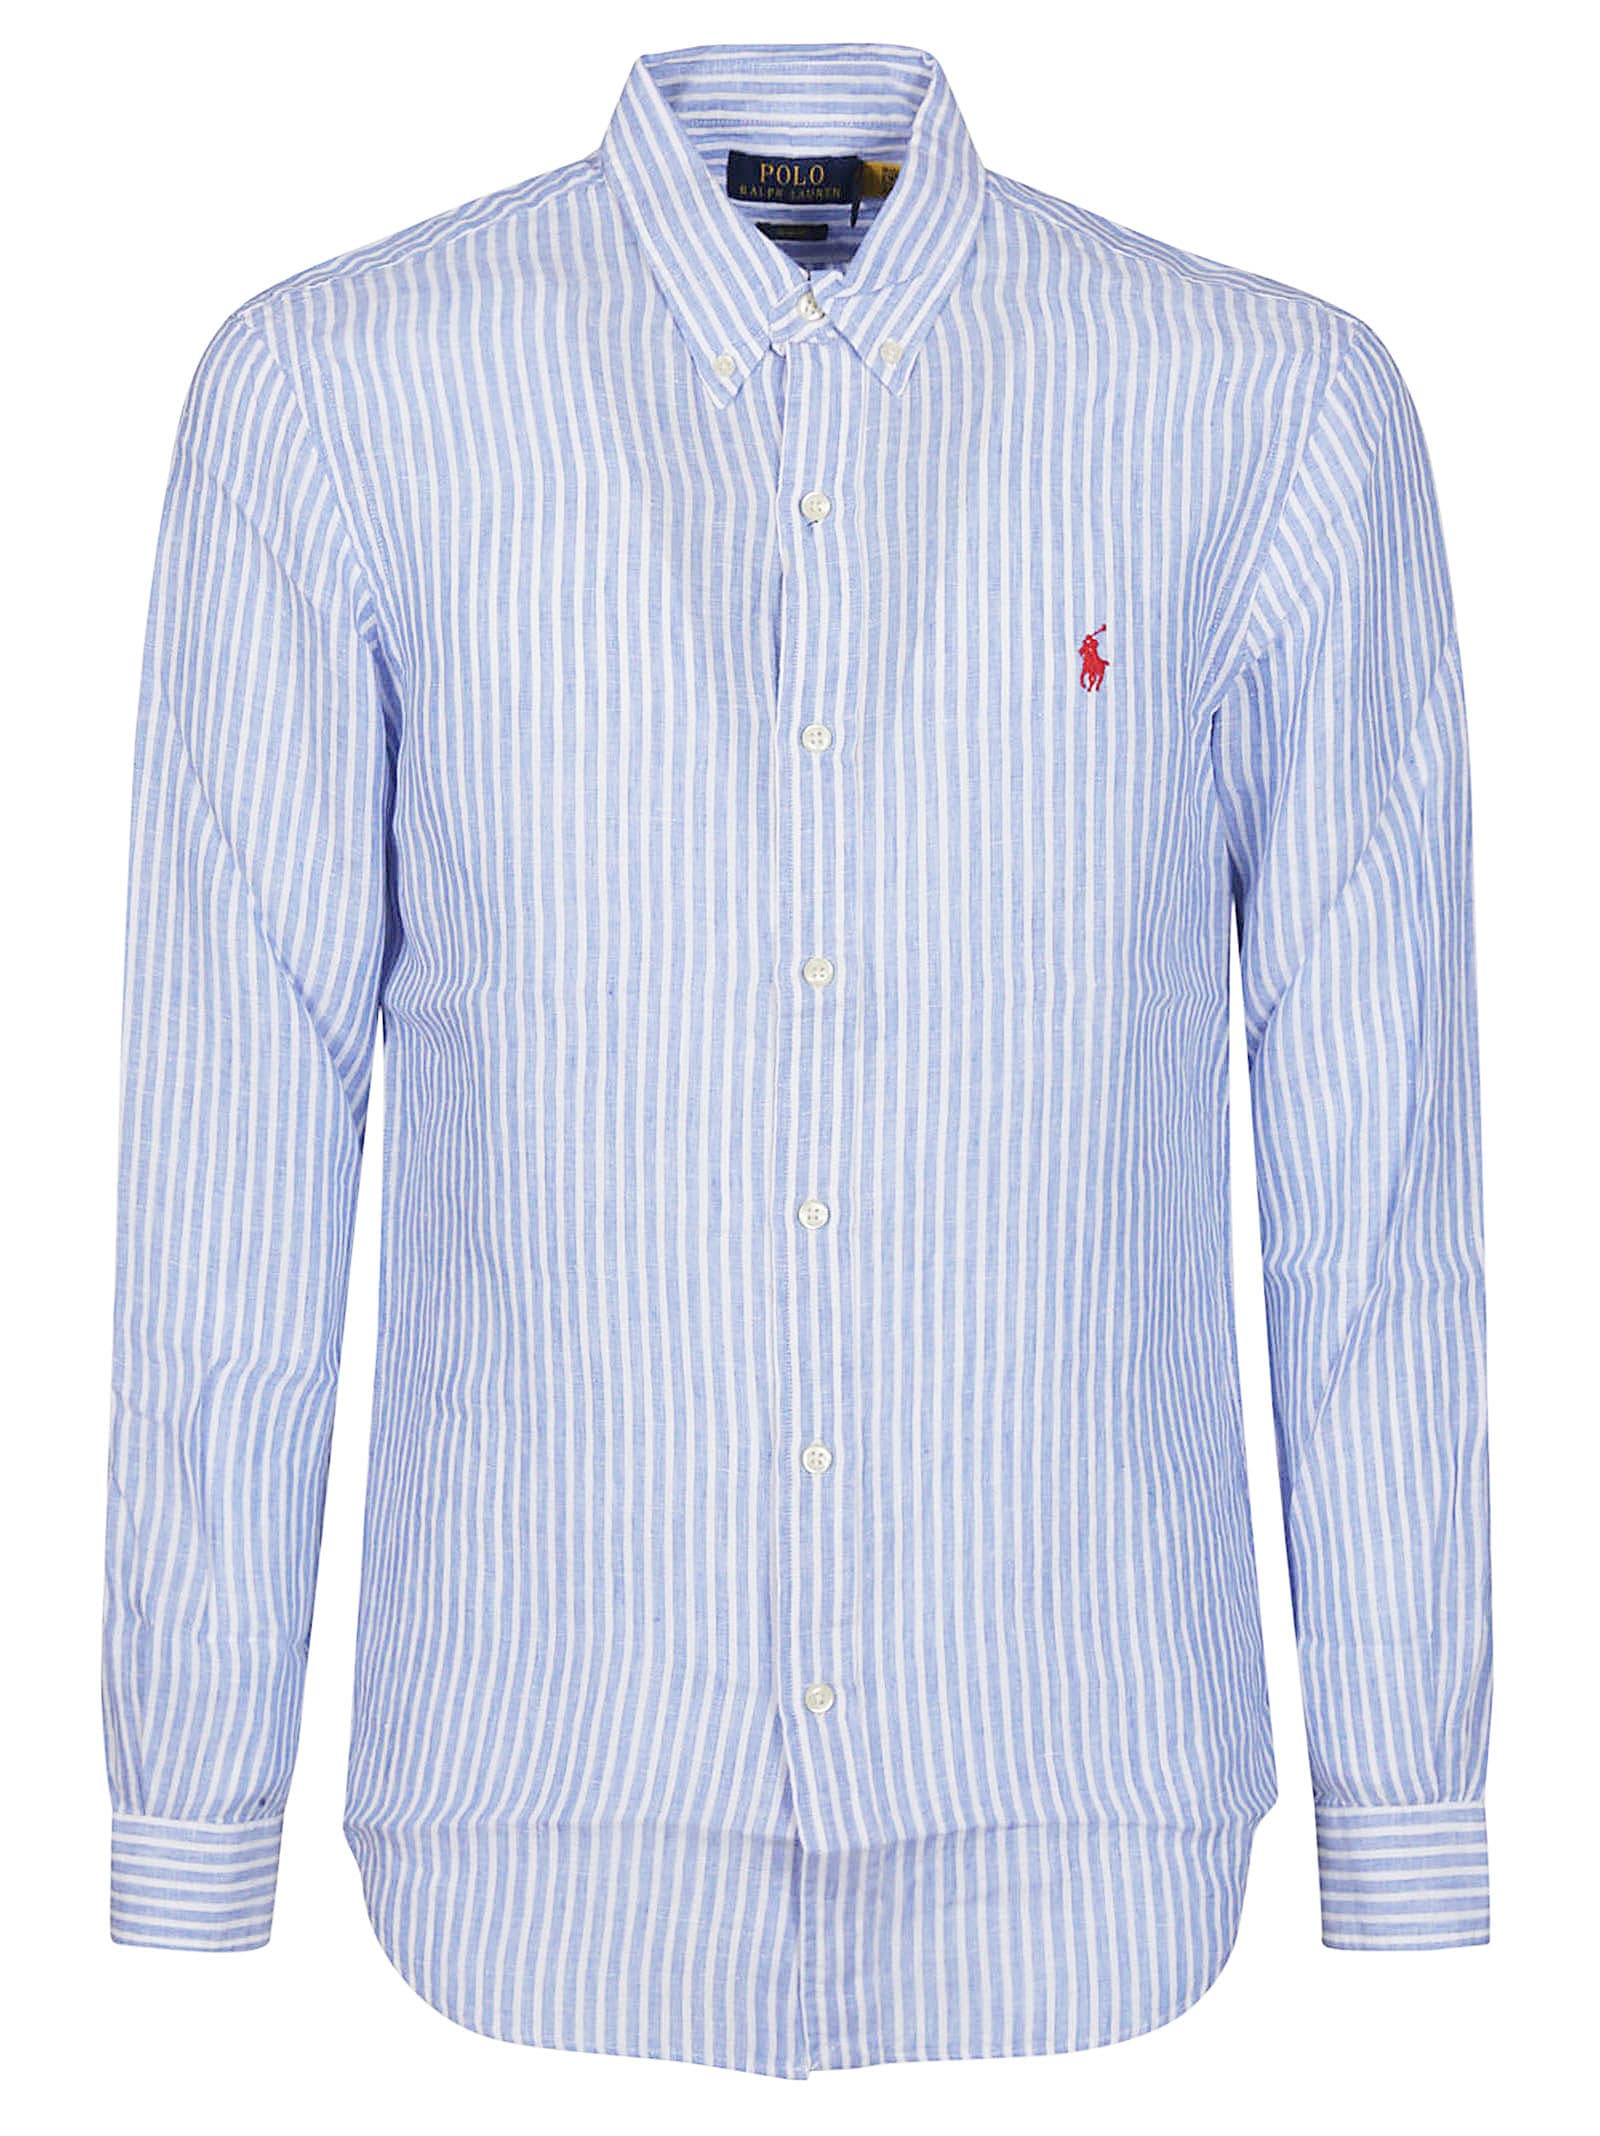 Polo Ralph Lauren Long Sleeve Sport Shirt In Blue/white